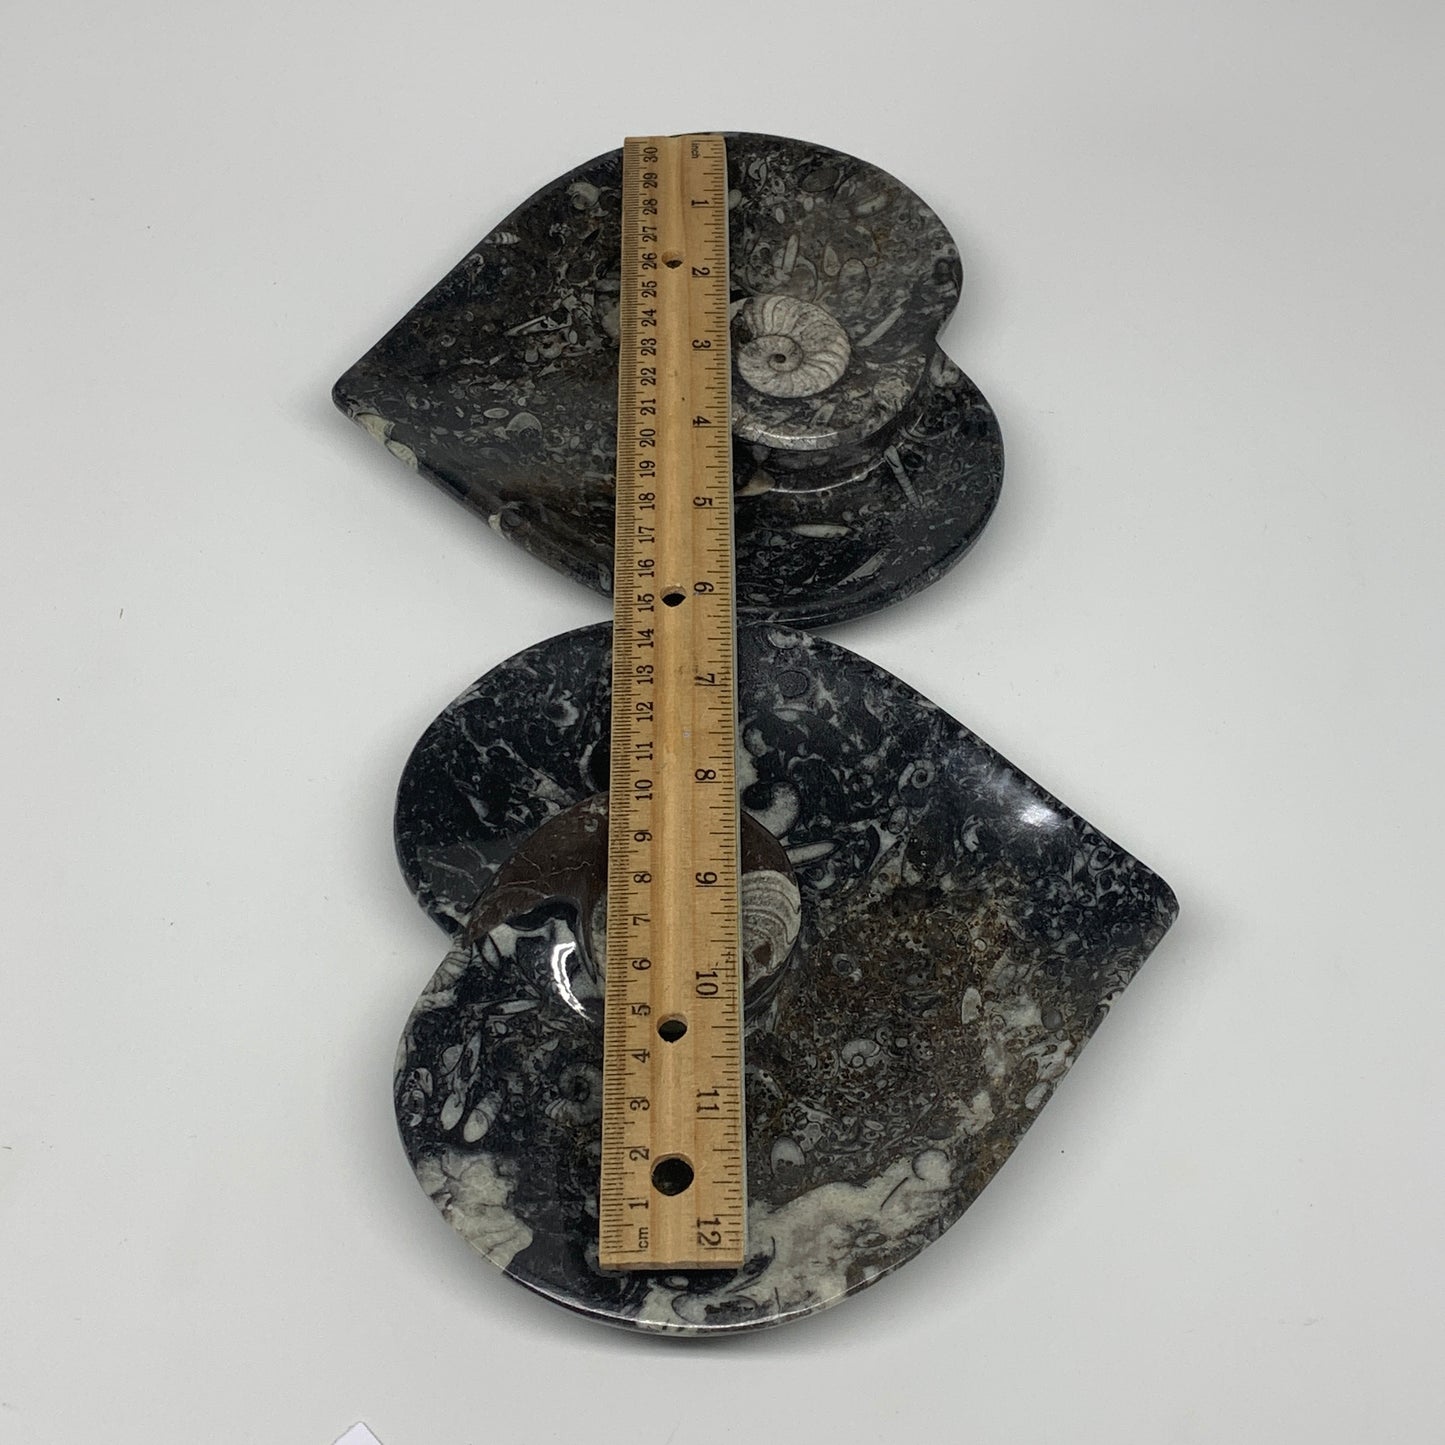 2pcs Set, 6.25"x6.25" Heart Fossils Orthoceras Ammonite Bowls @Morocco, B8473